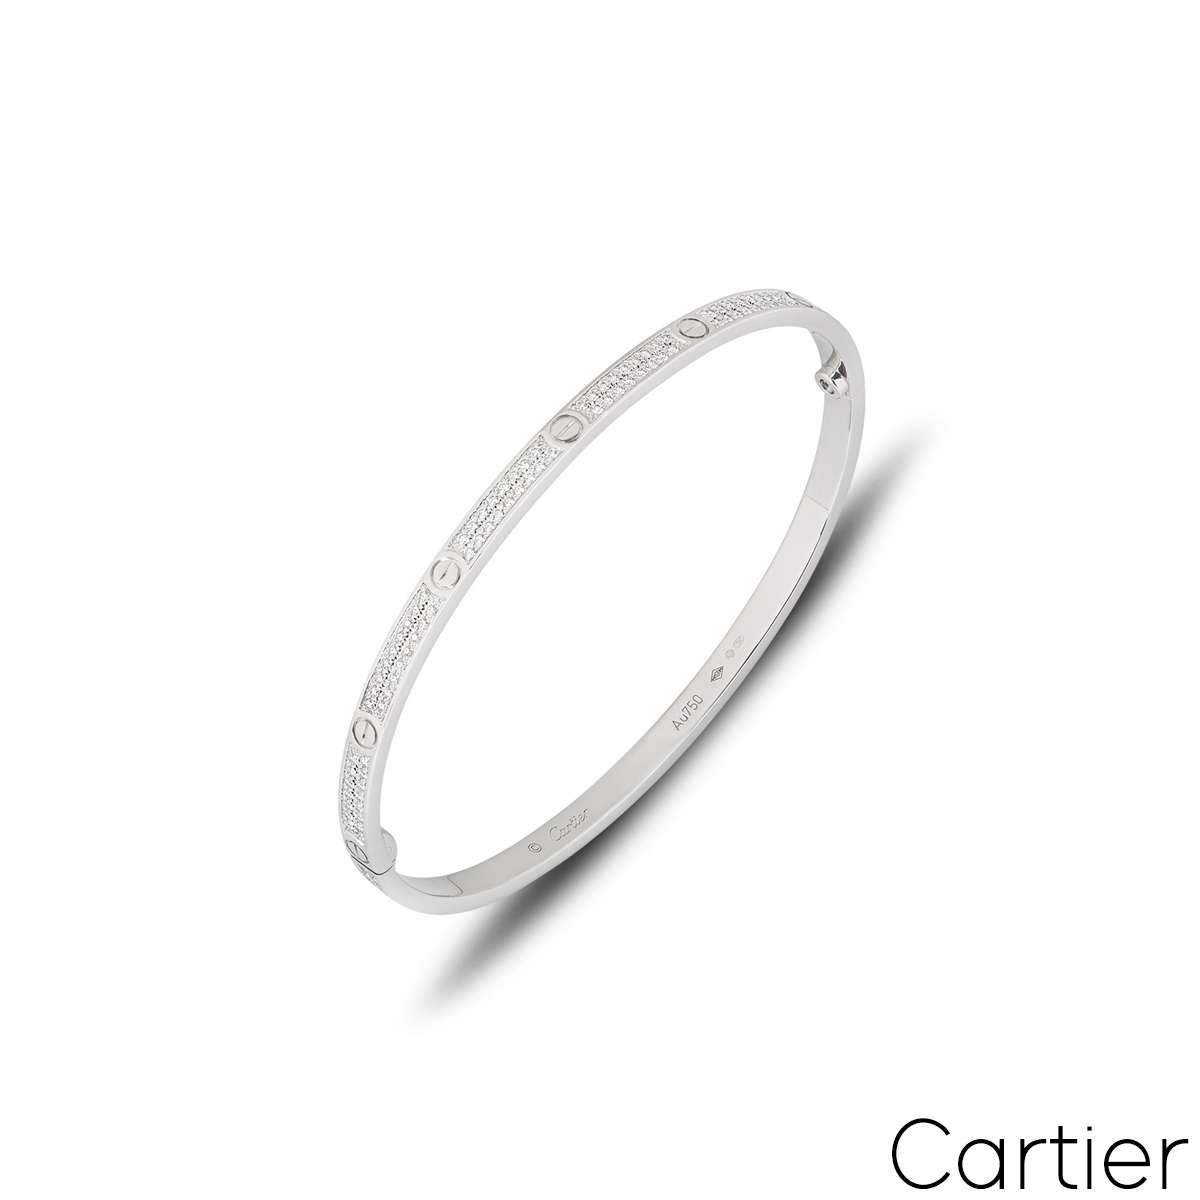 Cartier White Gold Pave Diamond SM Love Bracelet Size 16 N6710816